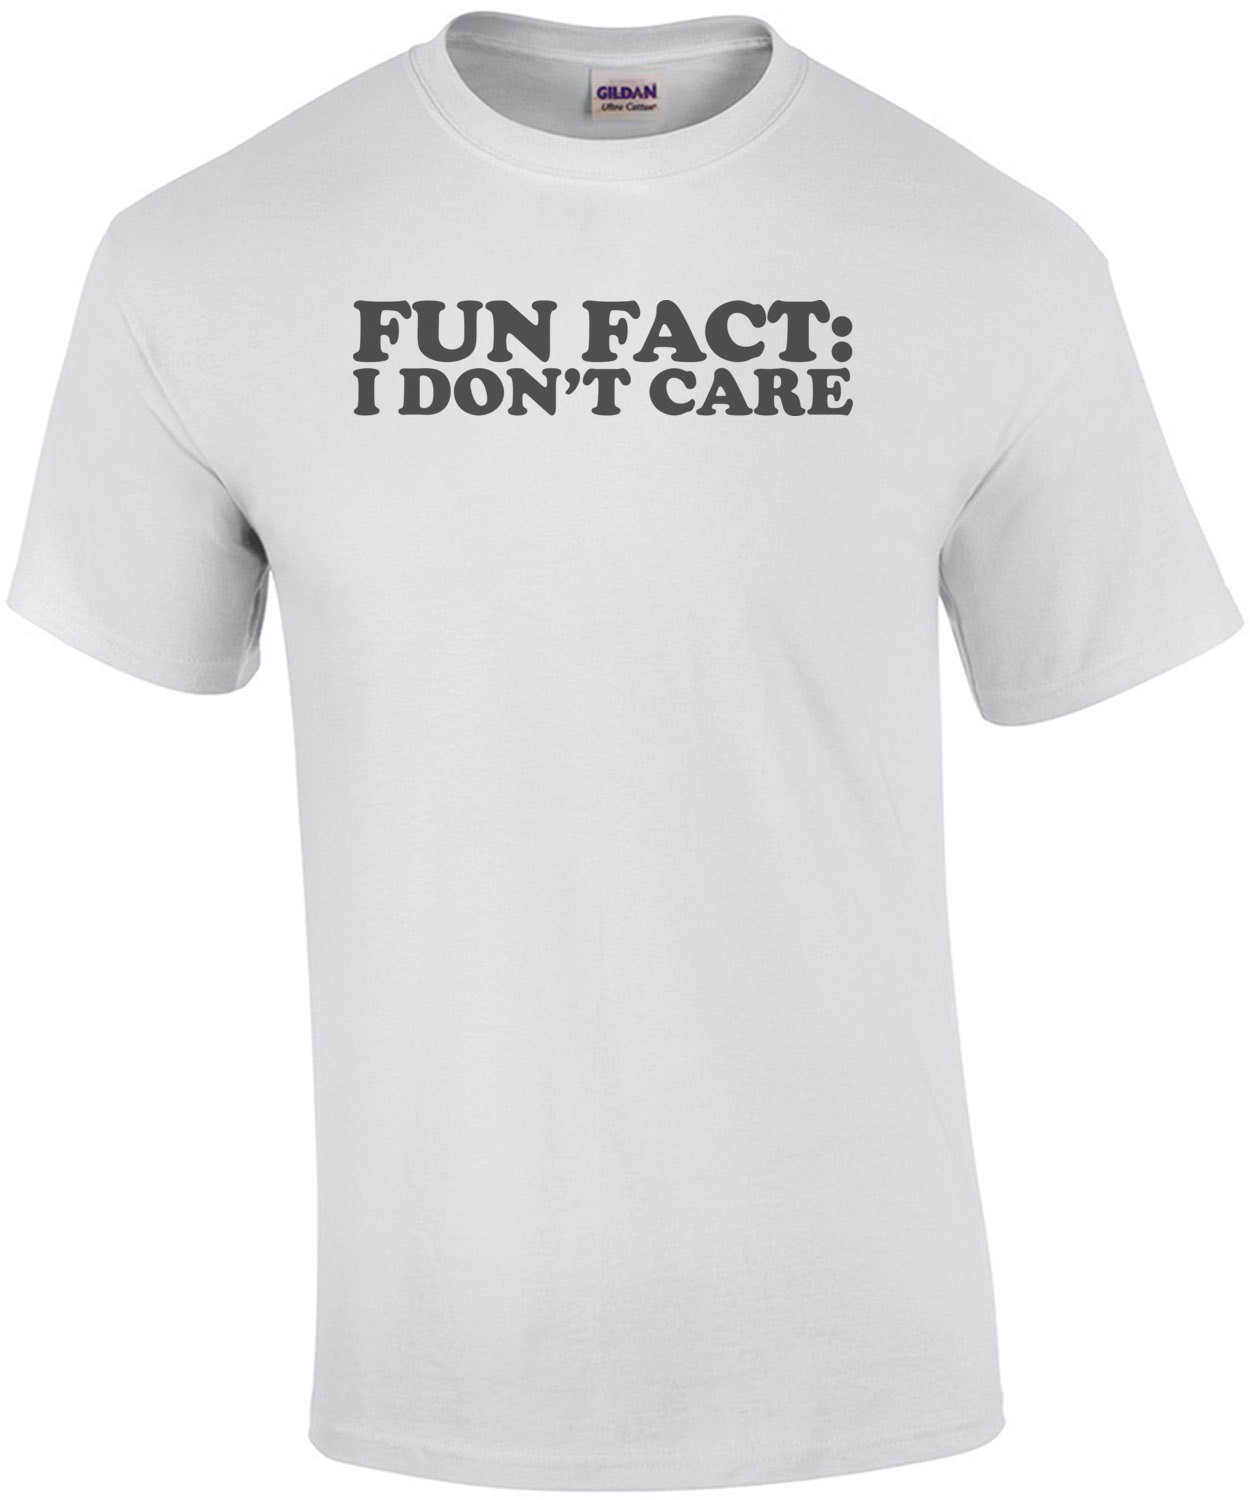 FUN FACT: I Don't Care T-Shirt